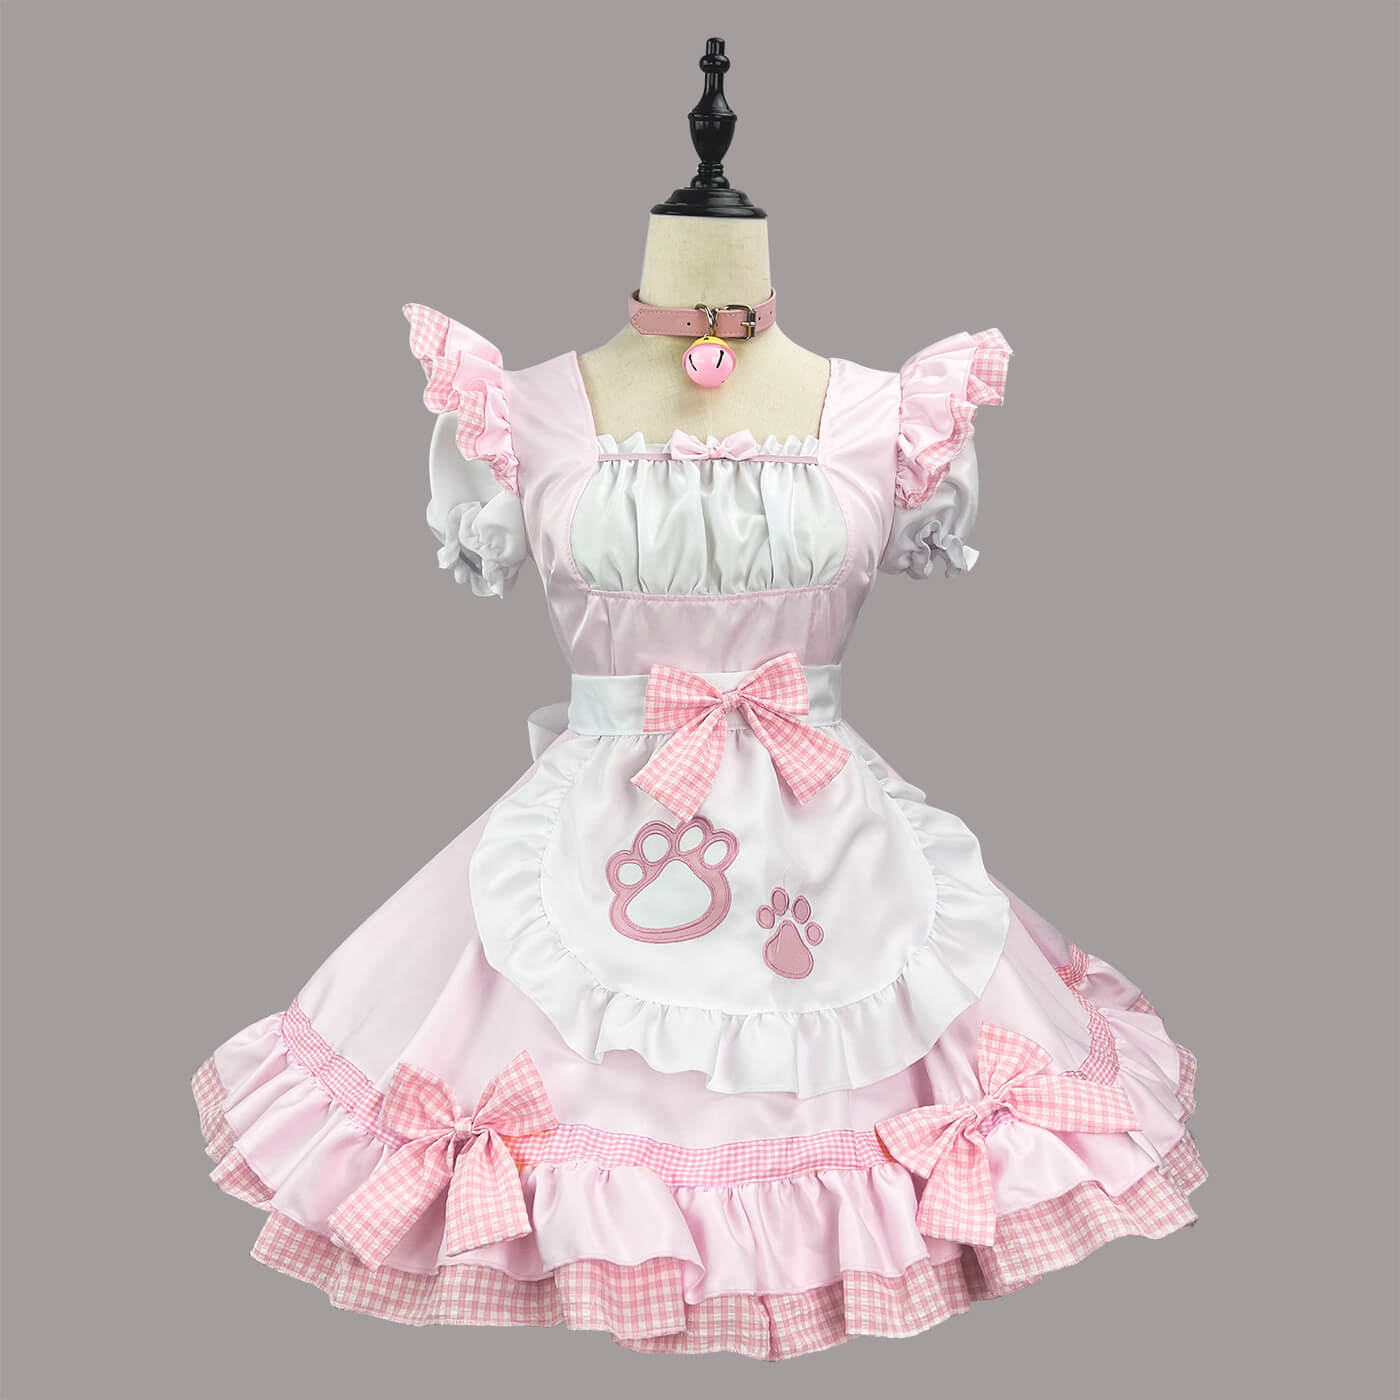 cutiekill-neko-cosplay-maid-dress-ah0484